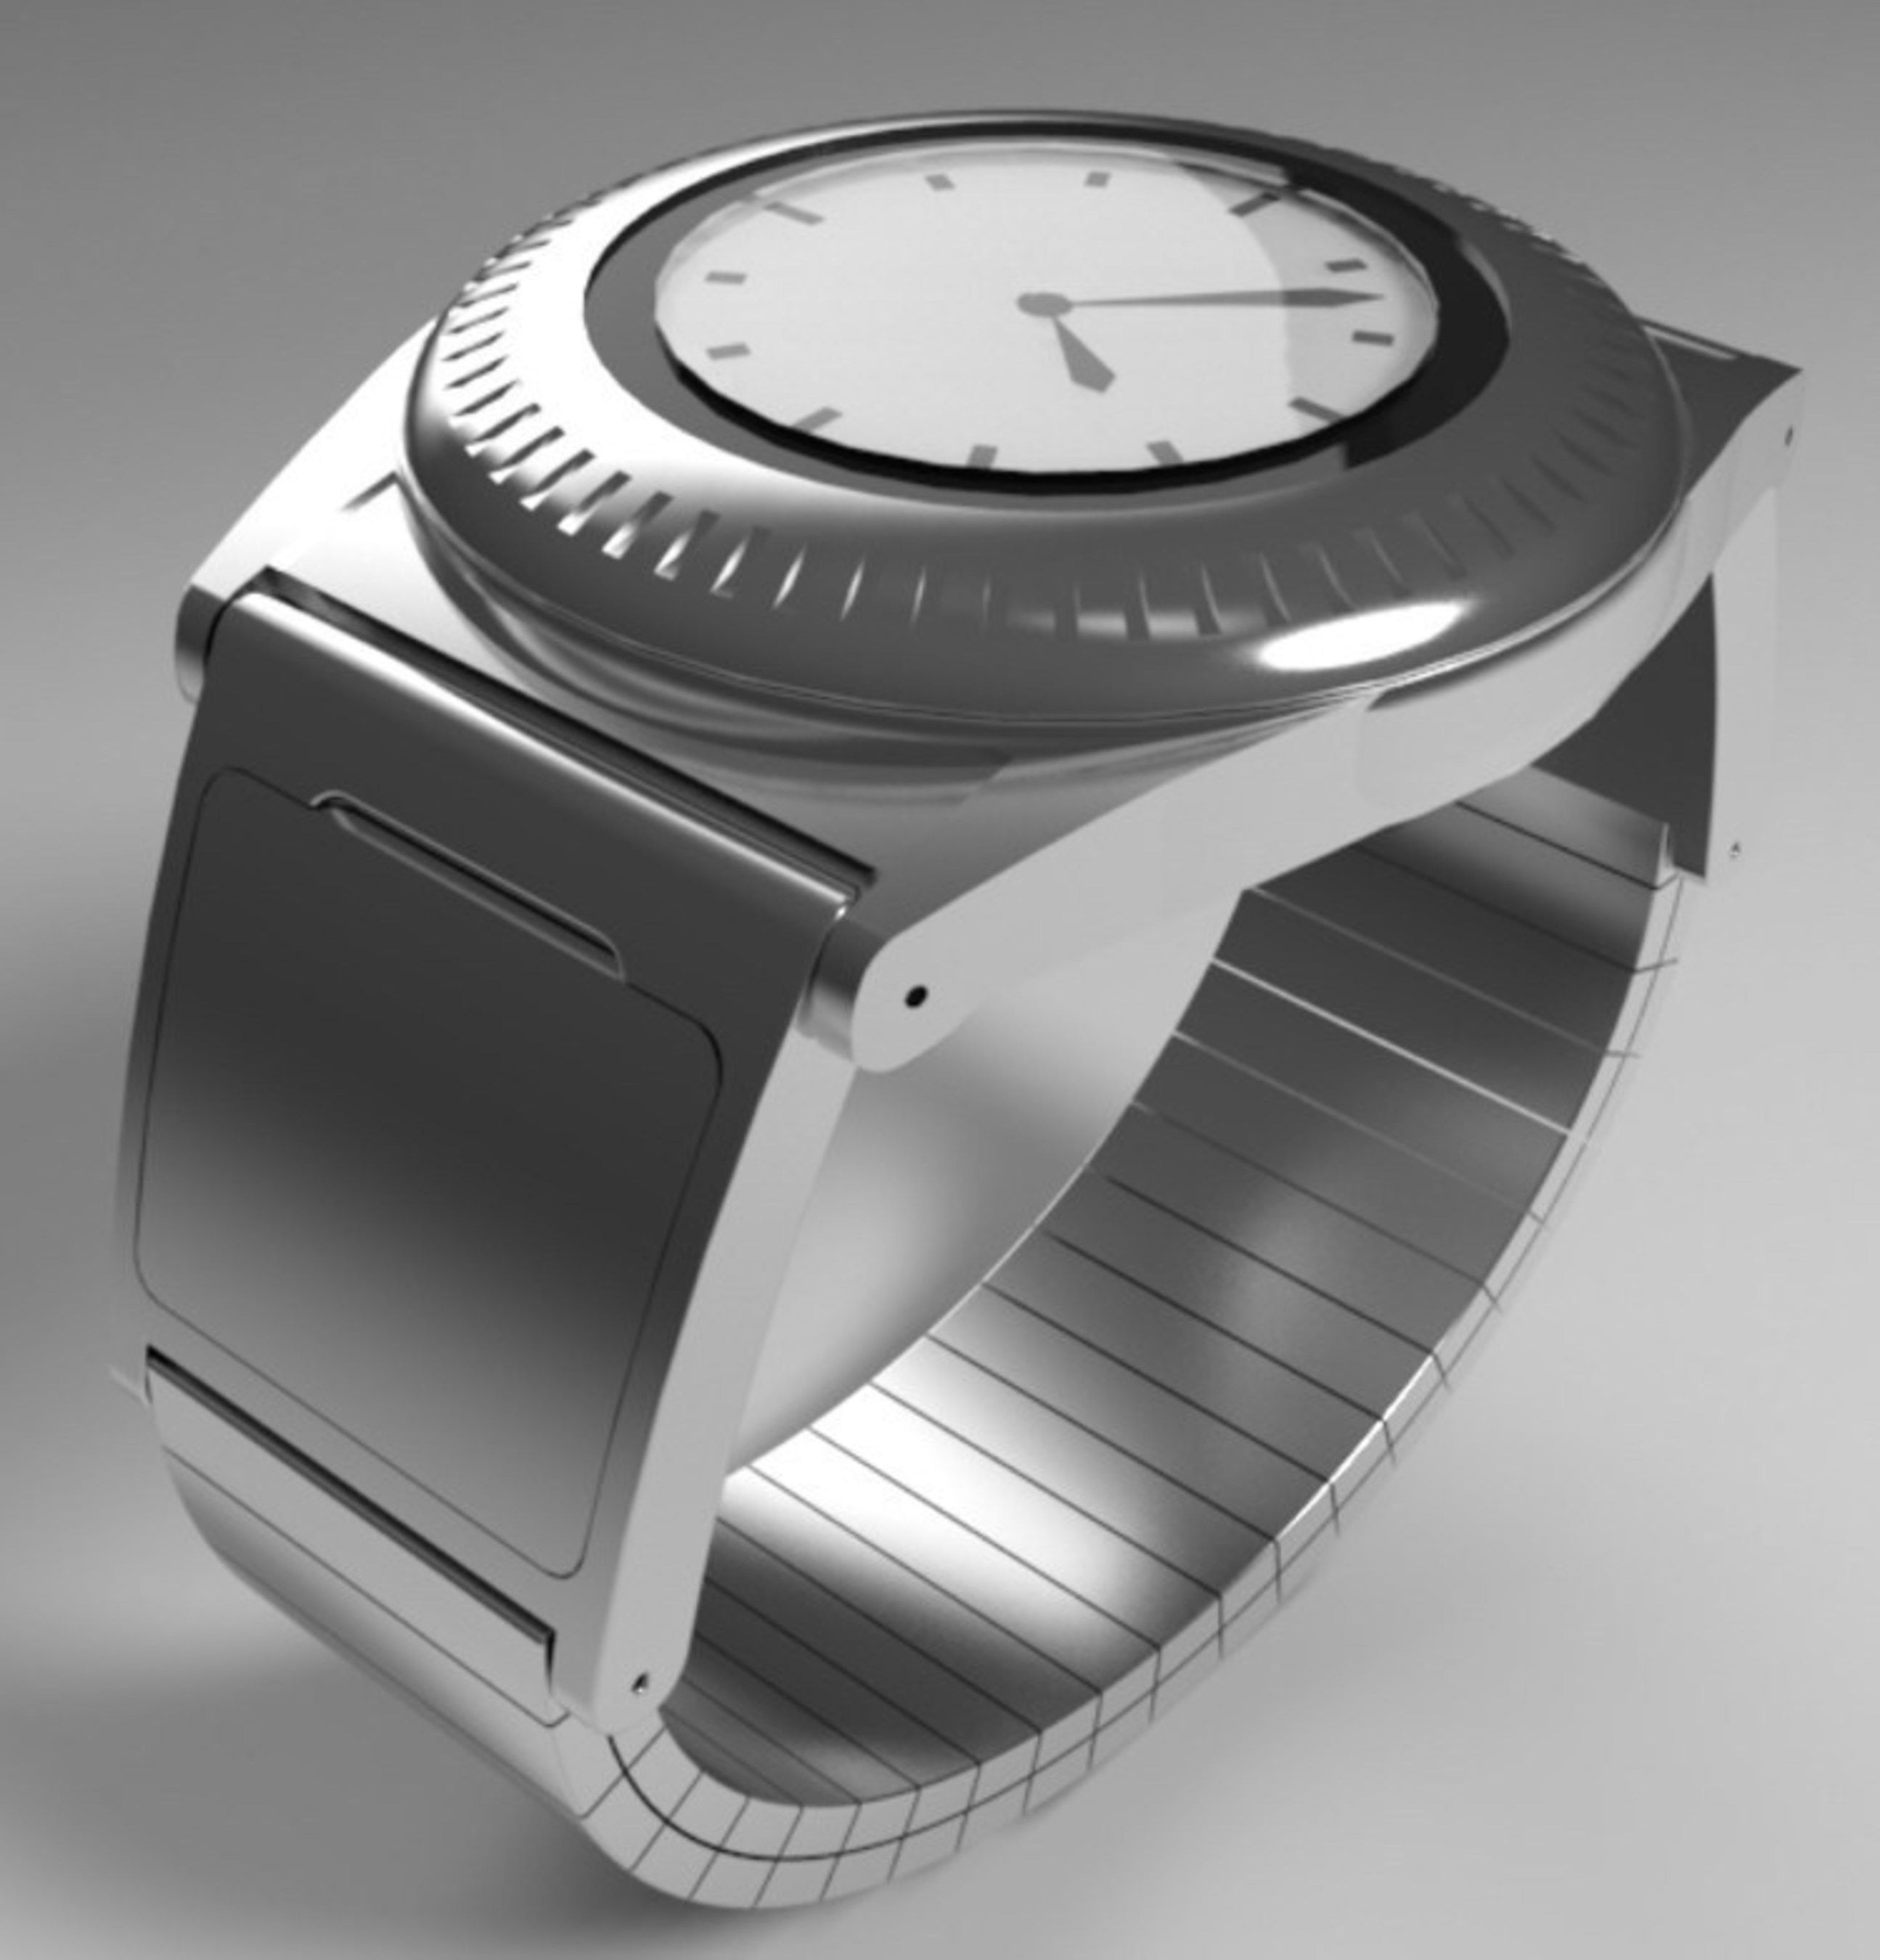 The Kanega smartwatch prototype will be on display at SXSW. #wearable #UnaliWear #SXSW